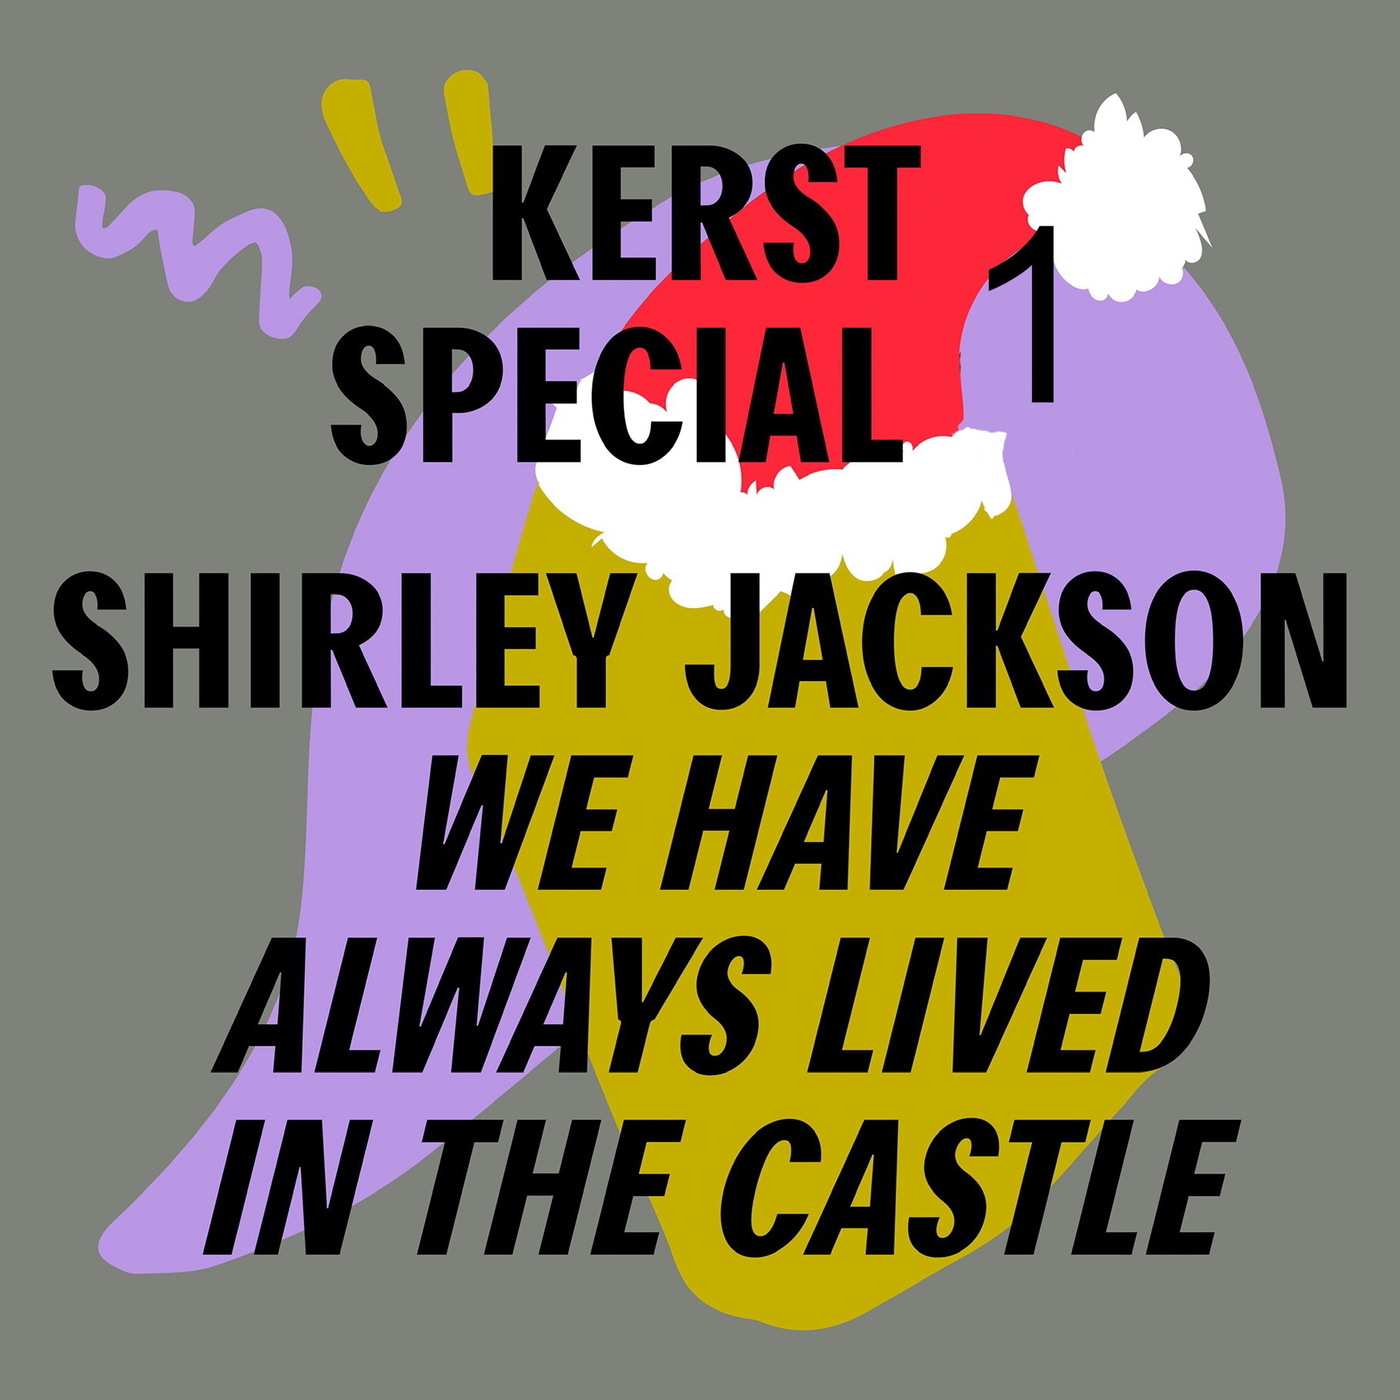 De griezelige kerstspecial | Shirley Jackson - We have always lived in the castle